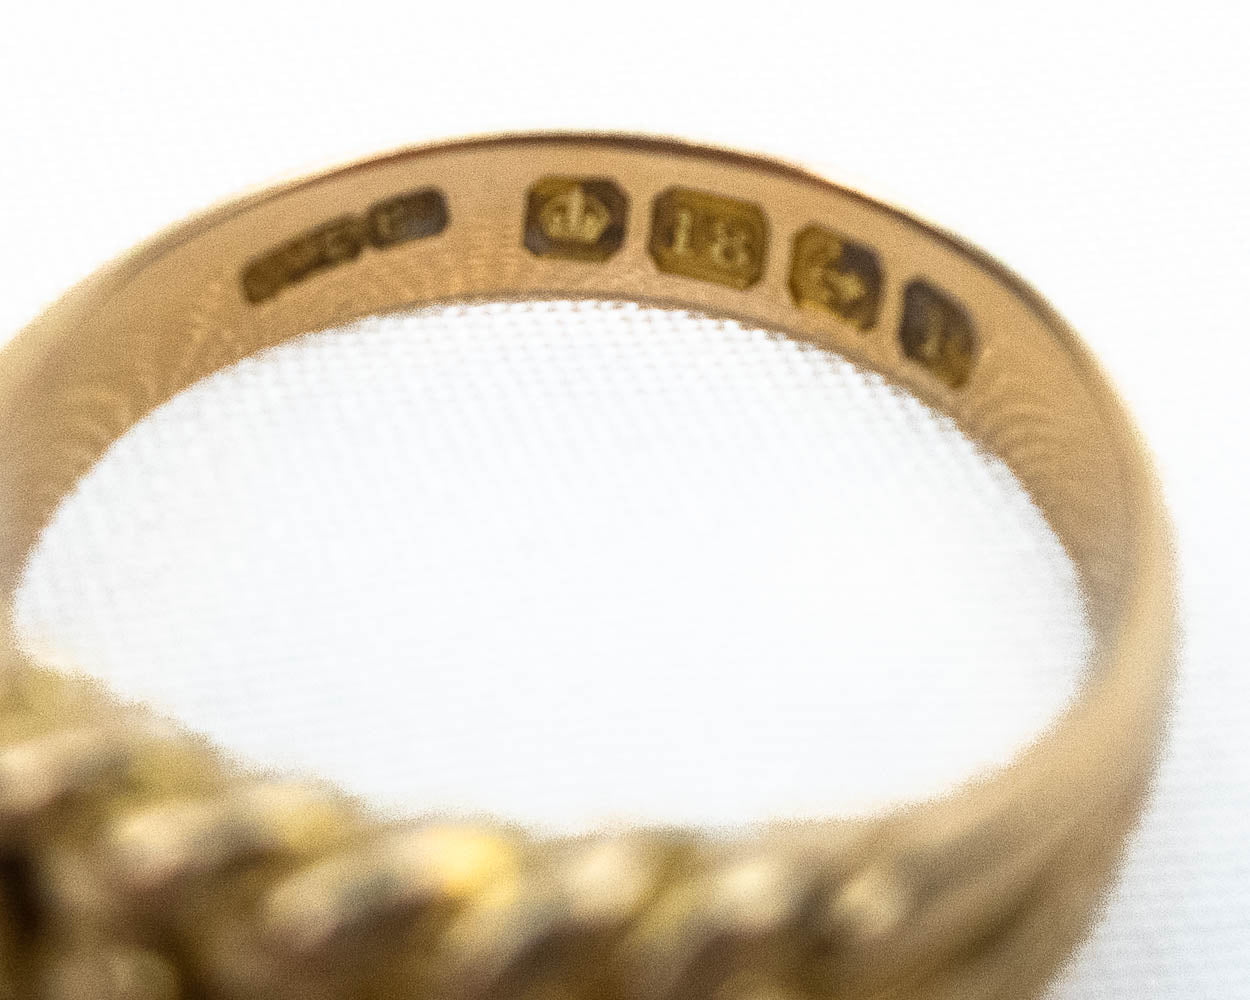 Edwardian 18KT Braided Keeper Ring